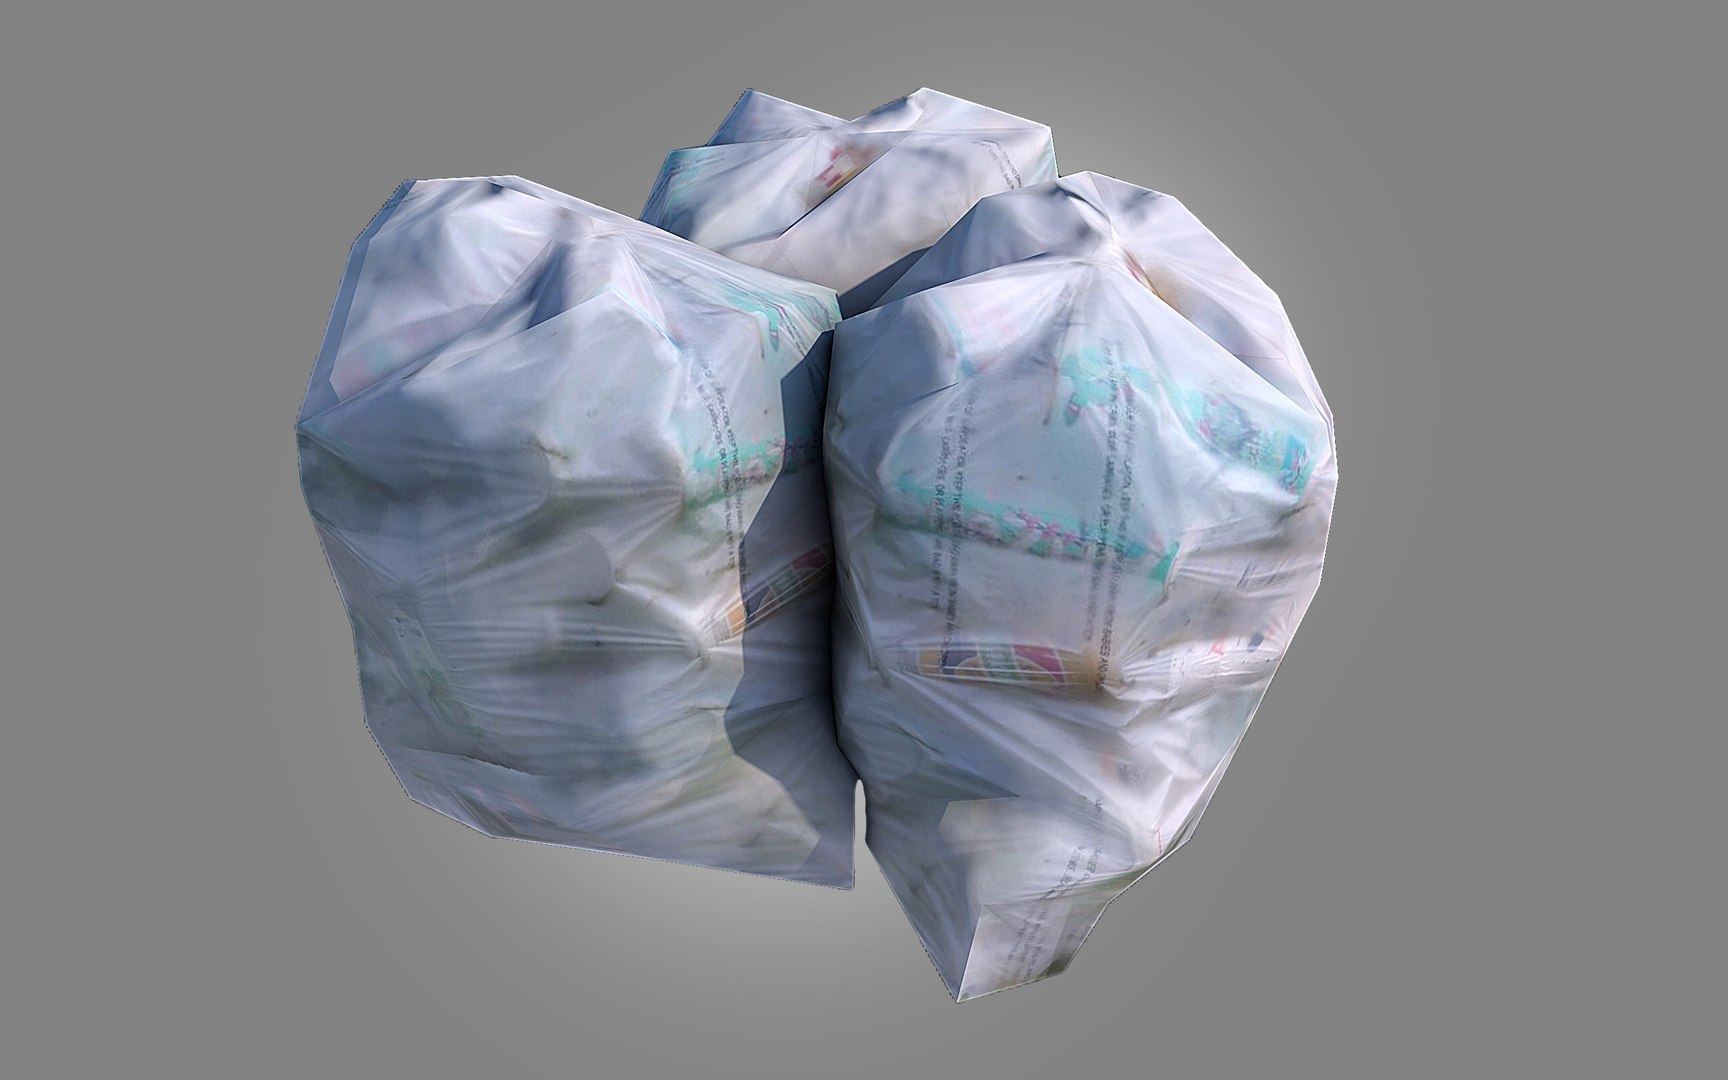 62,749 White Trash Bag Images, Stock Photos, 3D objects, & Vectors